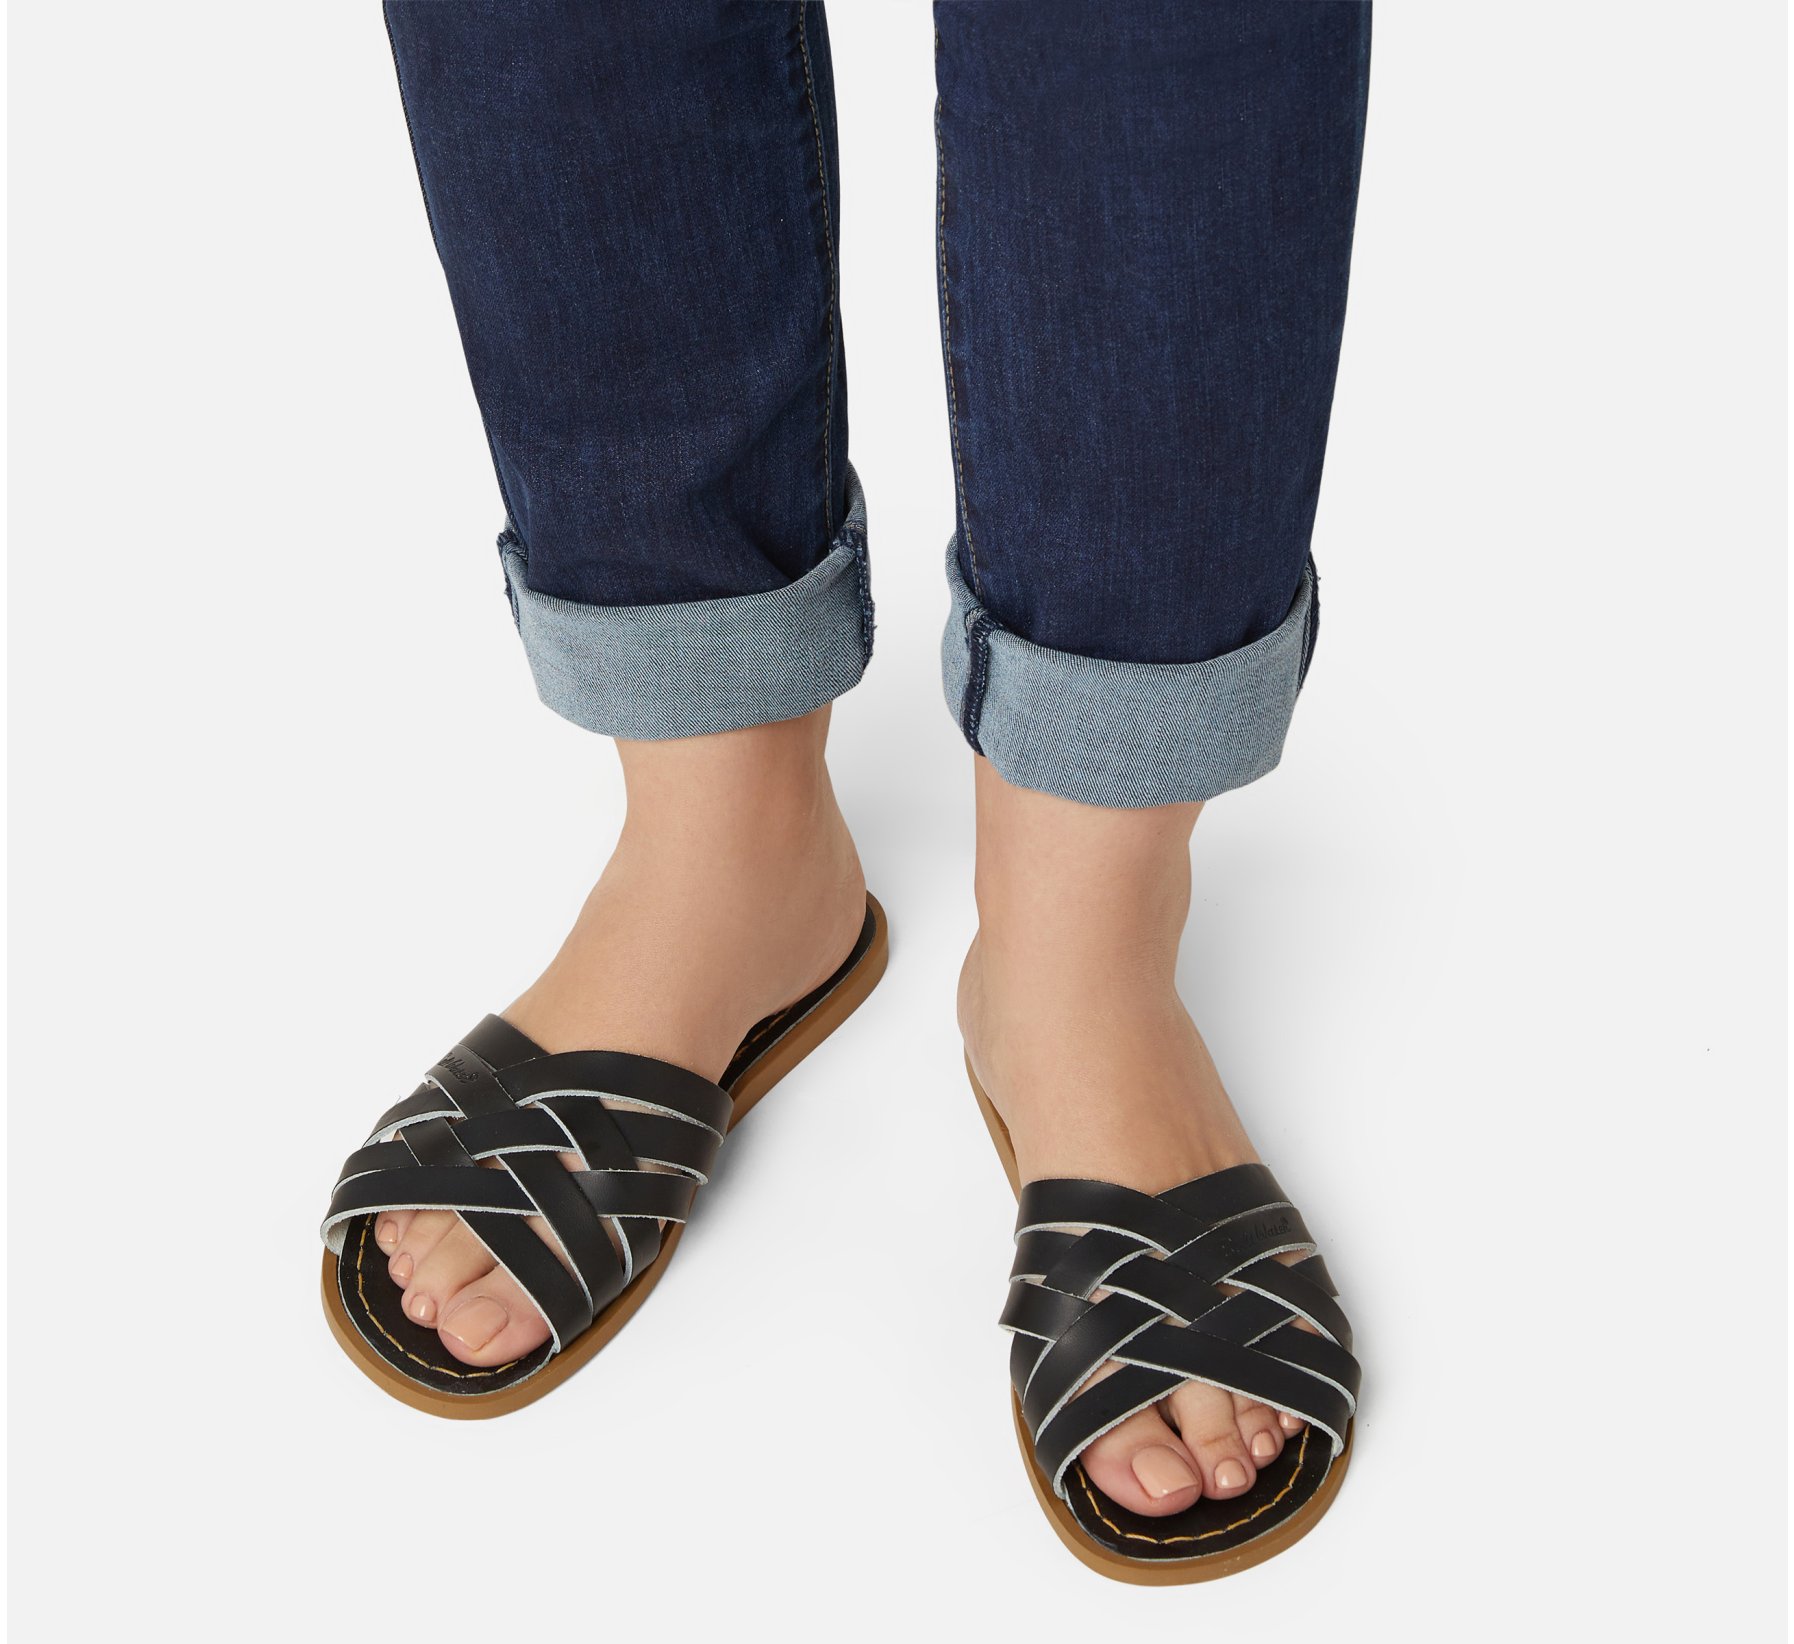 Retro Slide Black Sandal - Salt Water Sandals